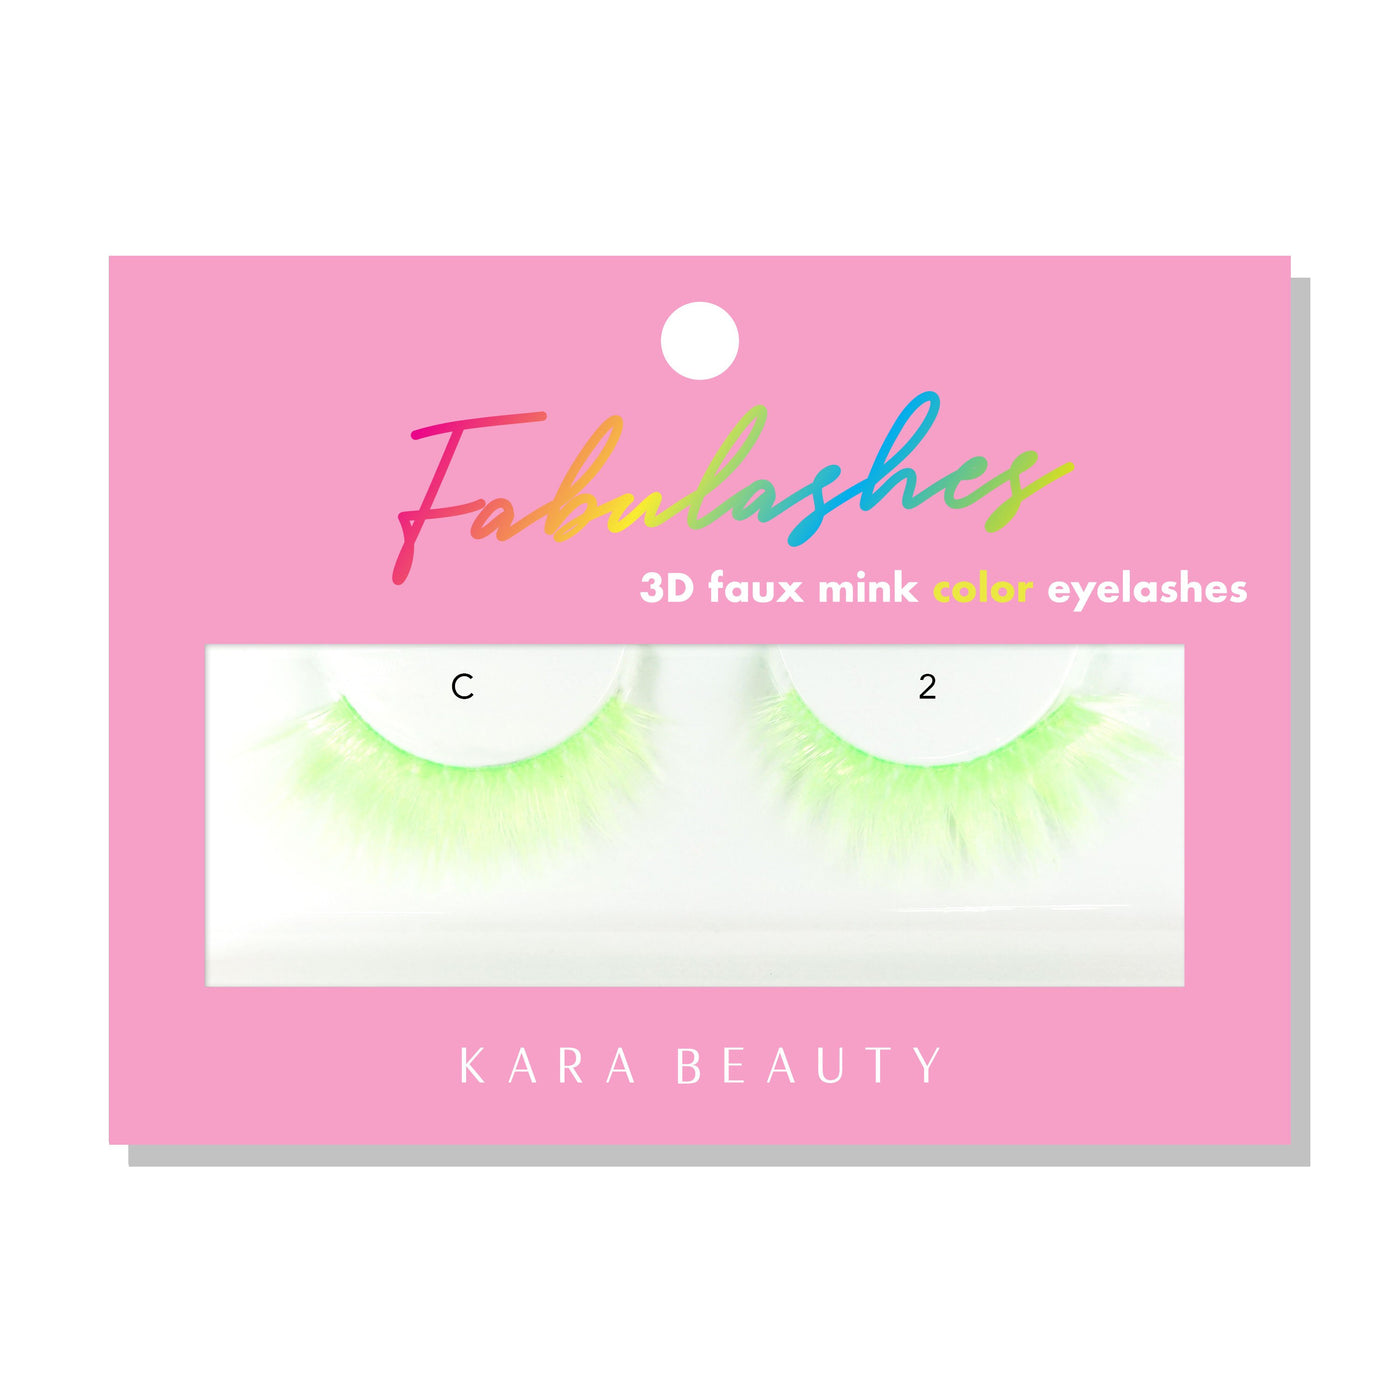 Kara Beauty green color 3D faux mink eyelashes